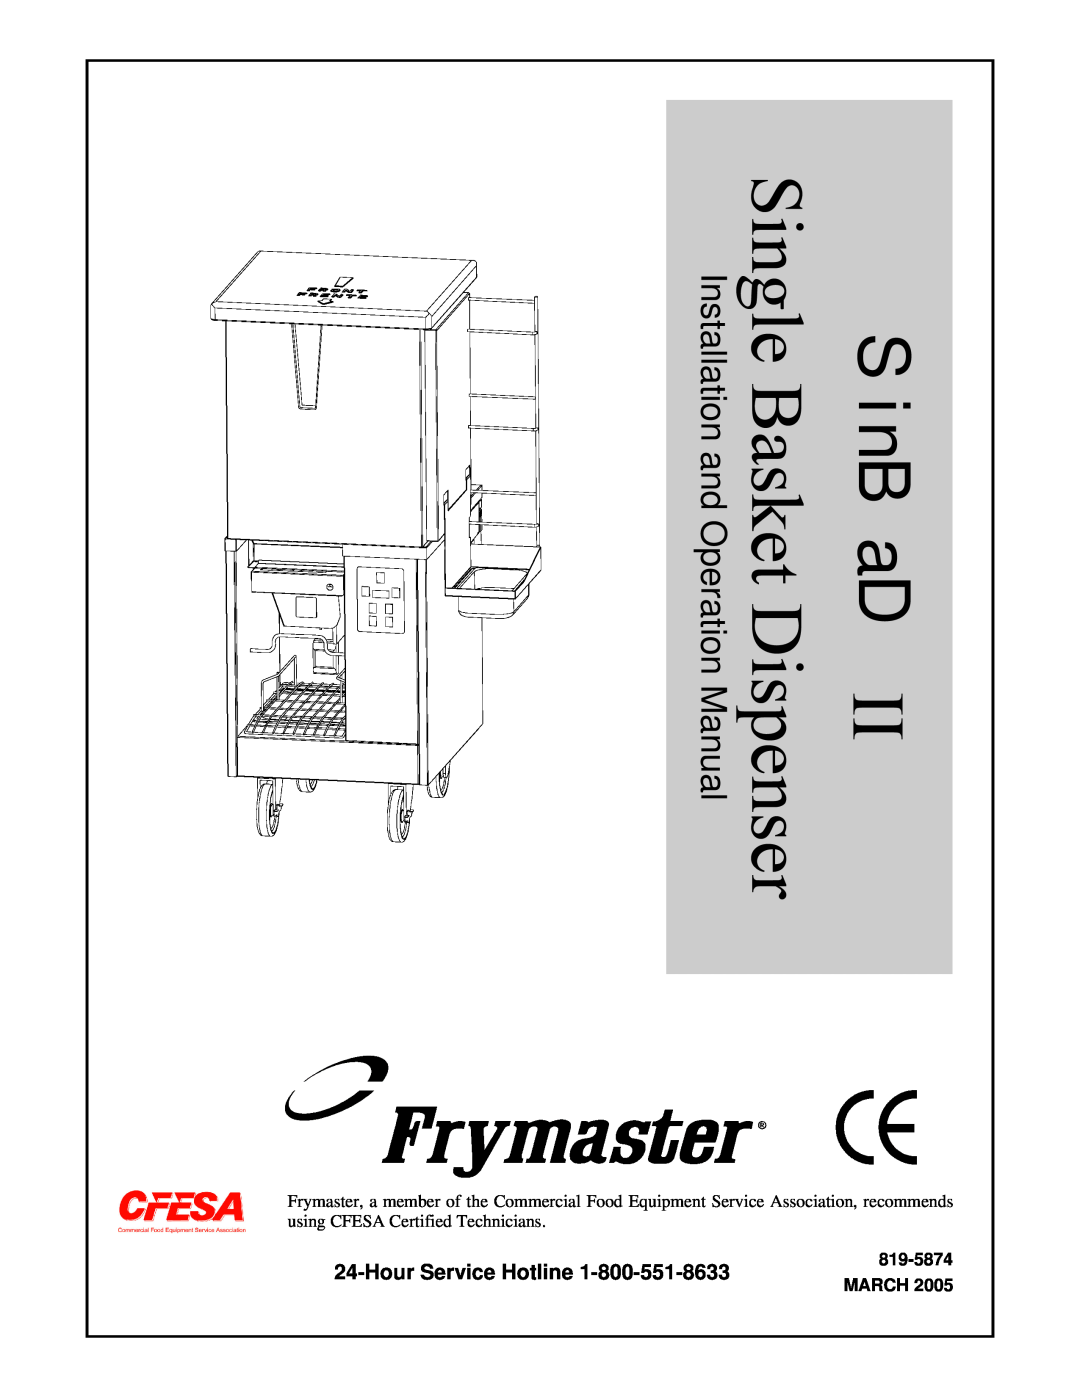 Frymaster II operation manual SinBaD, Installation and Operation, Manual 